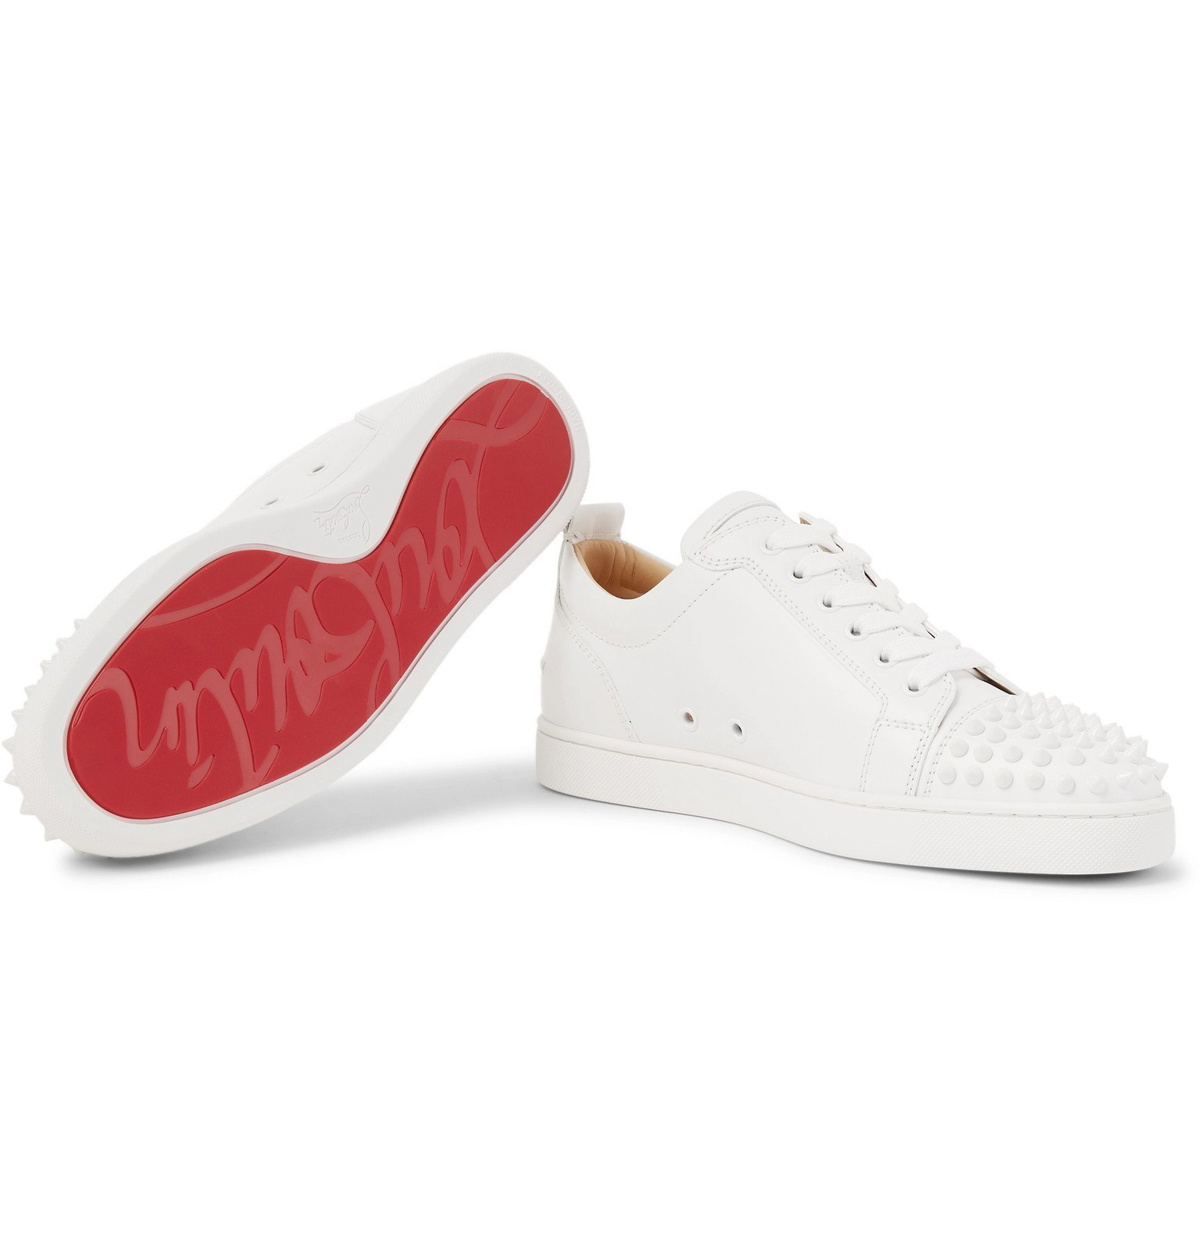 Christian Louboutin Louis Junior Spikes Cap-Toe Leather Sneakers - Men - White Sneakers - EU 42